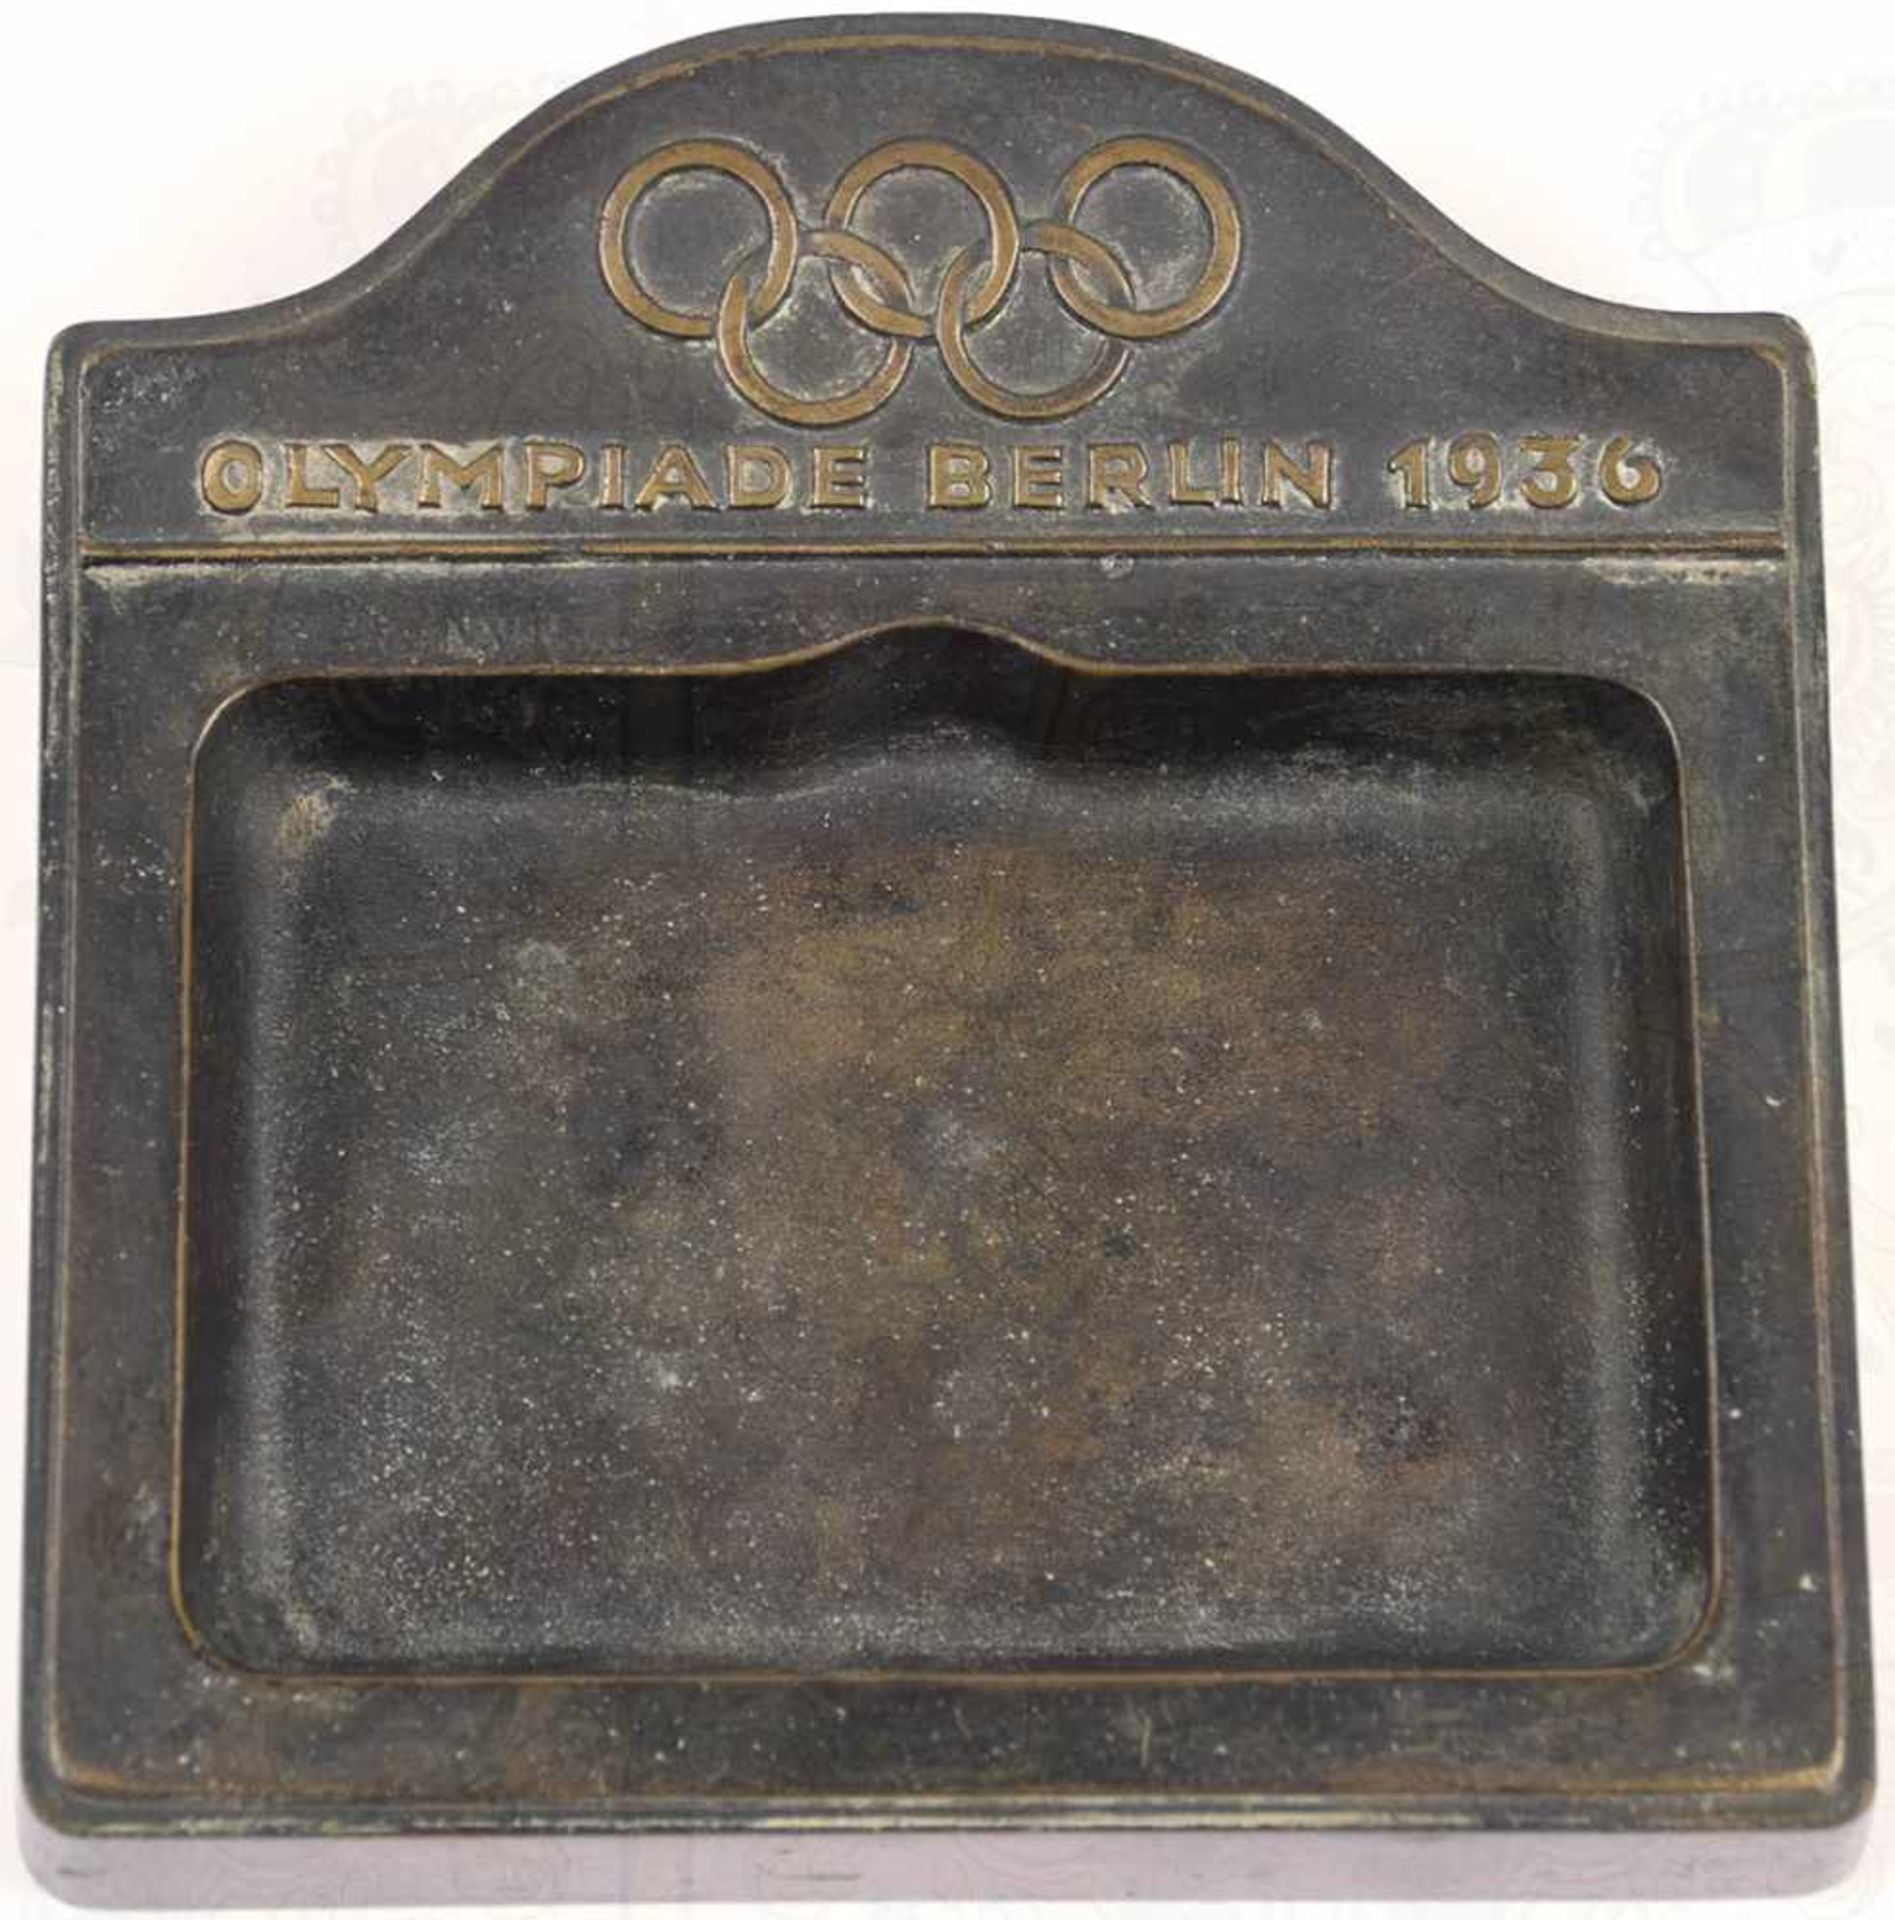 ASCHENBECHER, Bronze, patiniert, reliefierte Bez. „Olympiade Berlin 1936“, sowie reliefierte